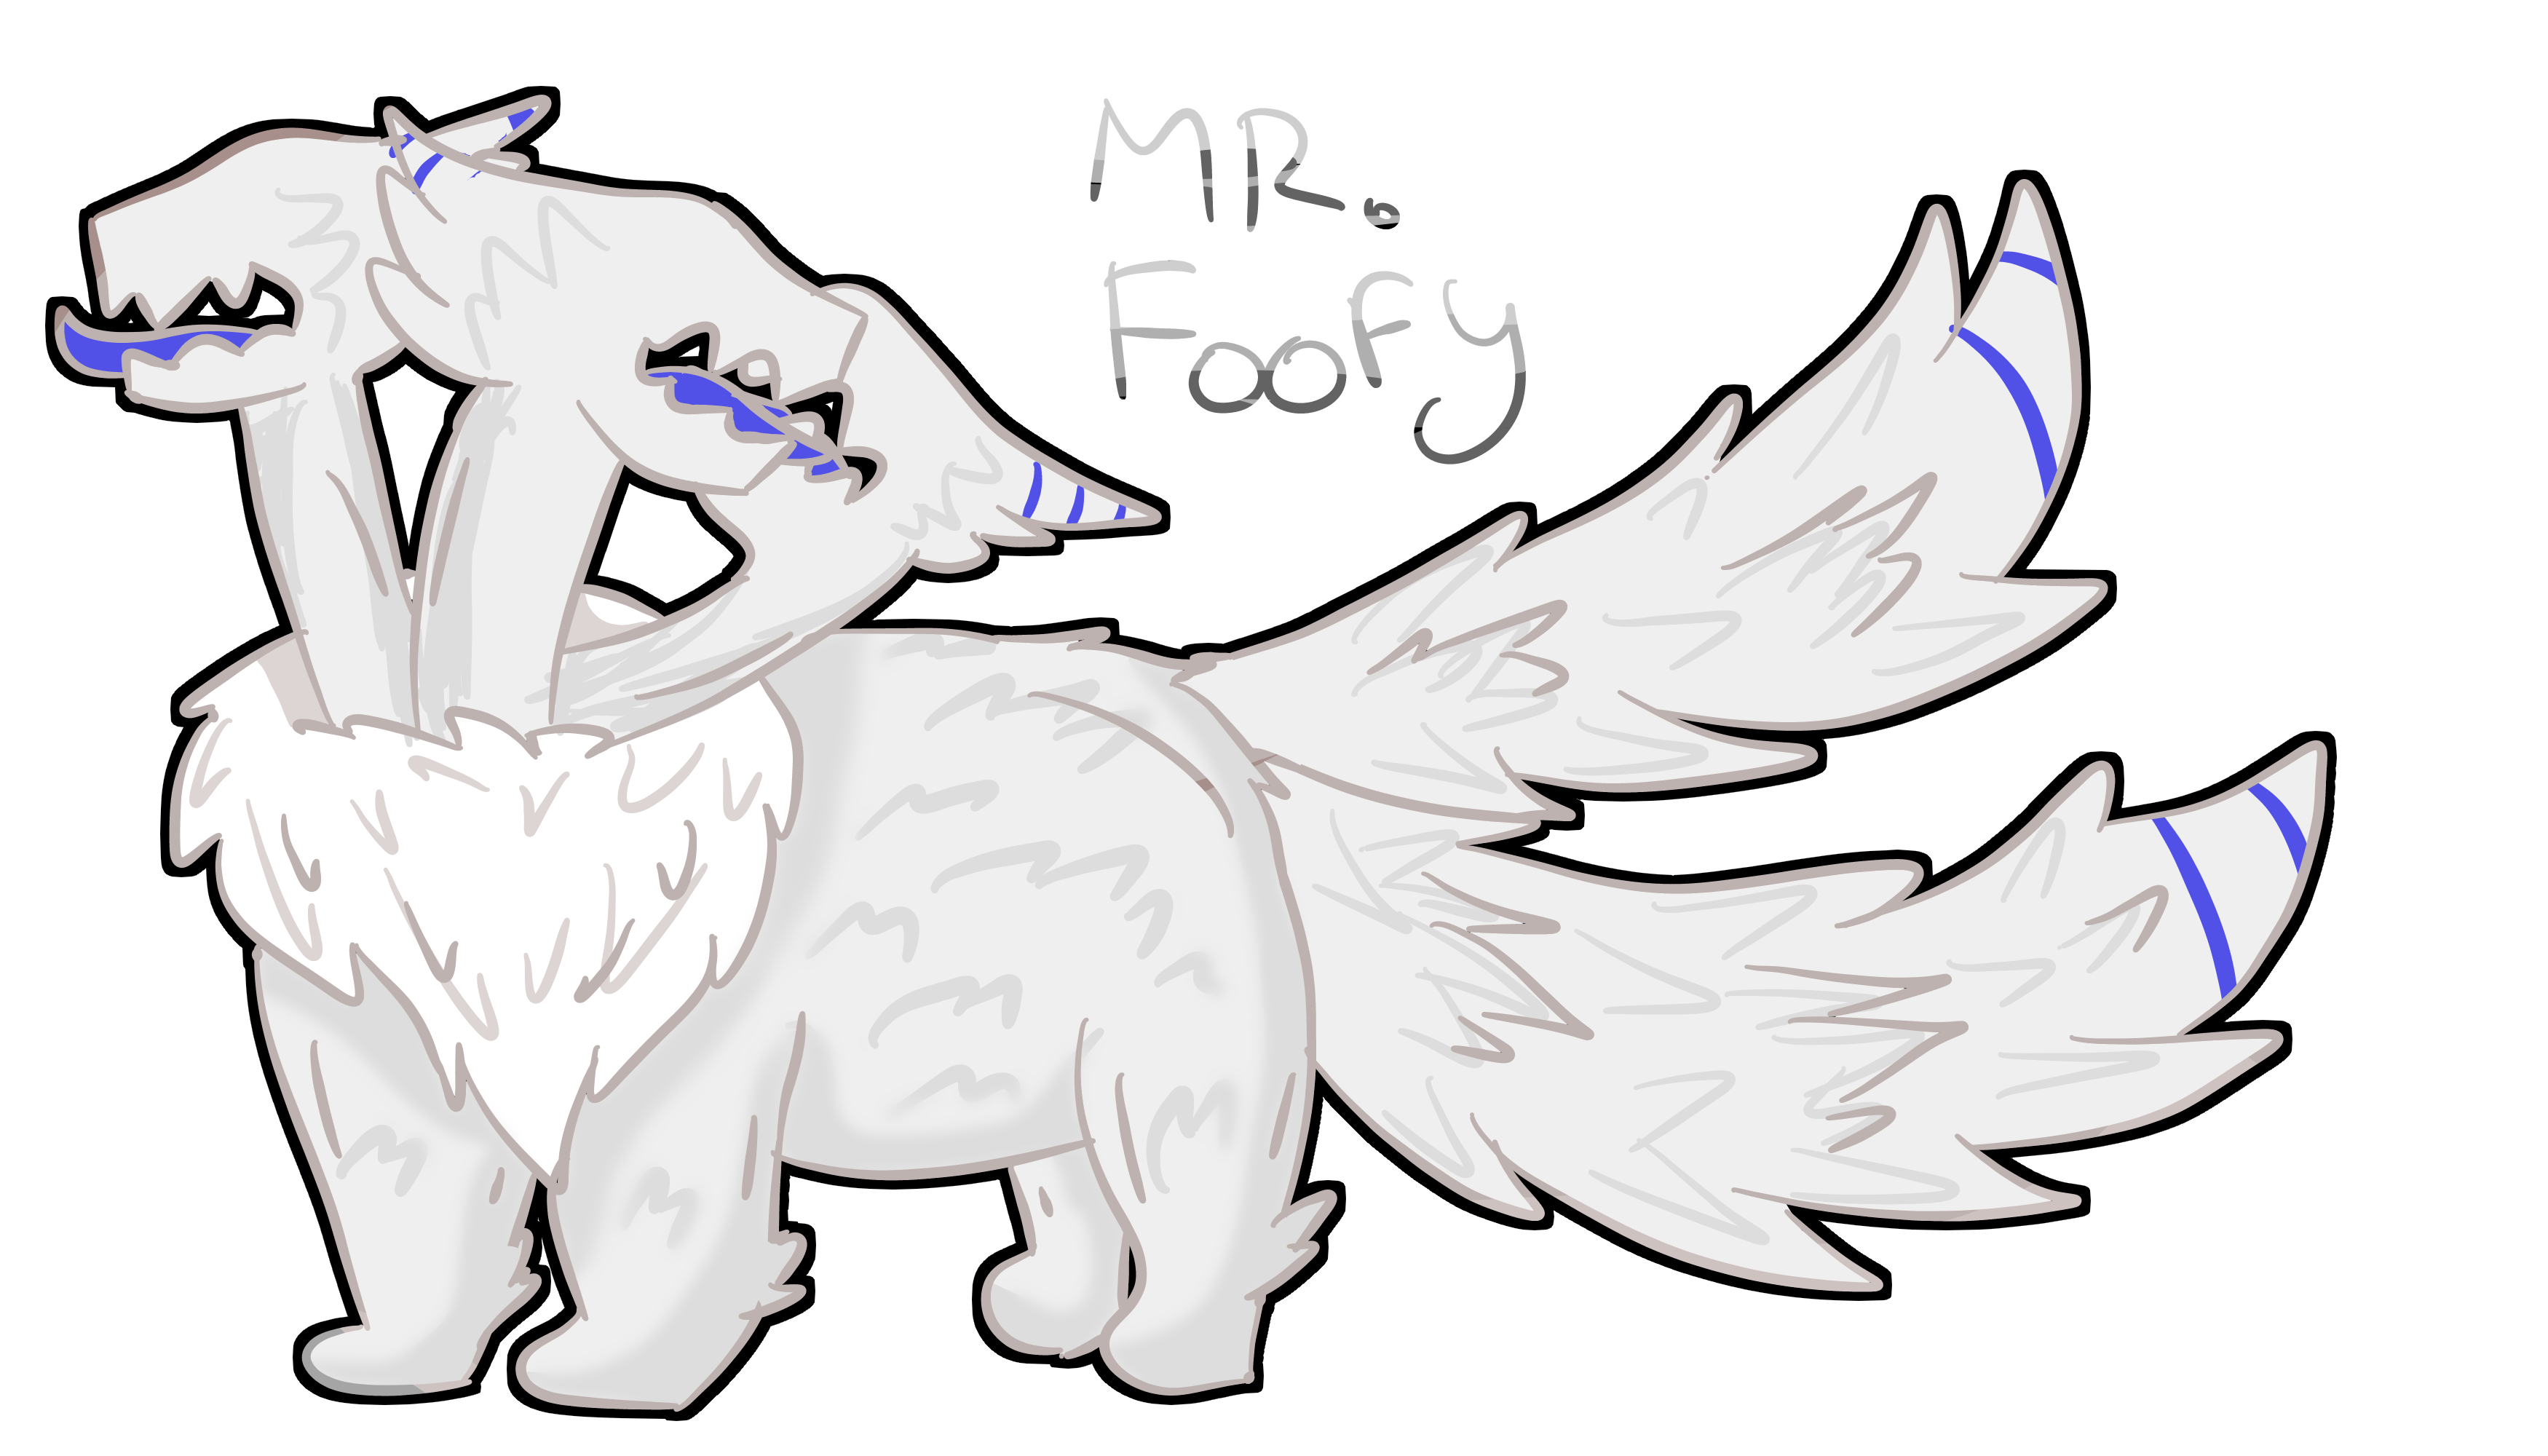 CO: Mr. Foofy